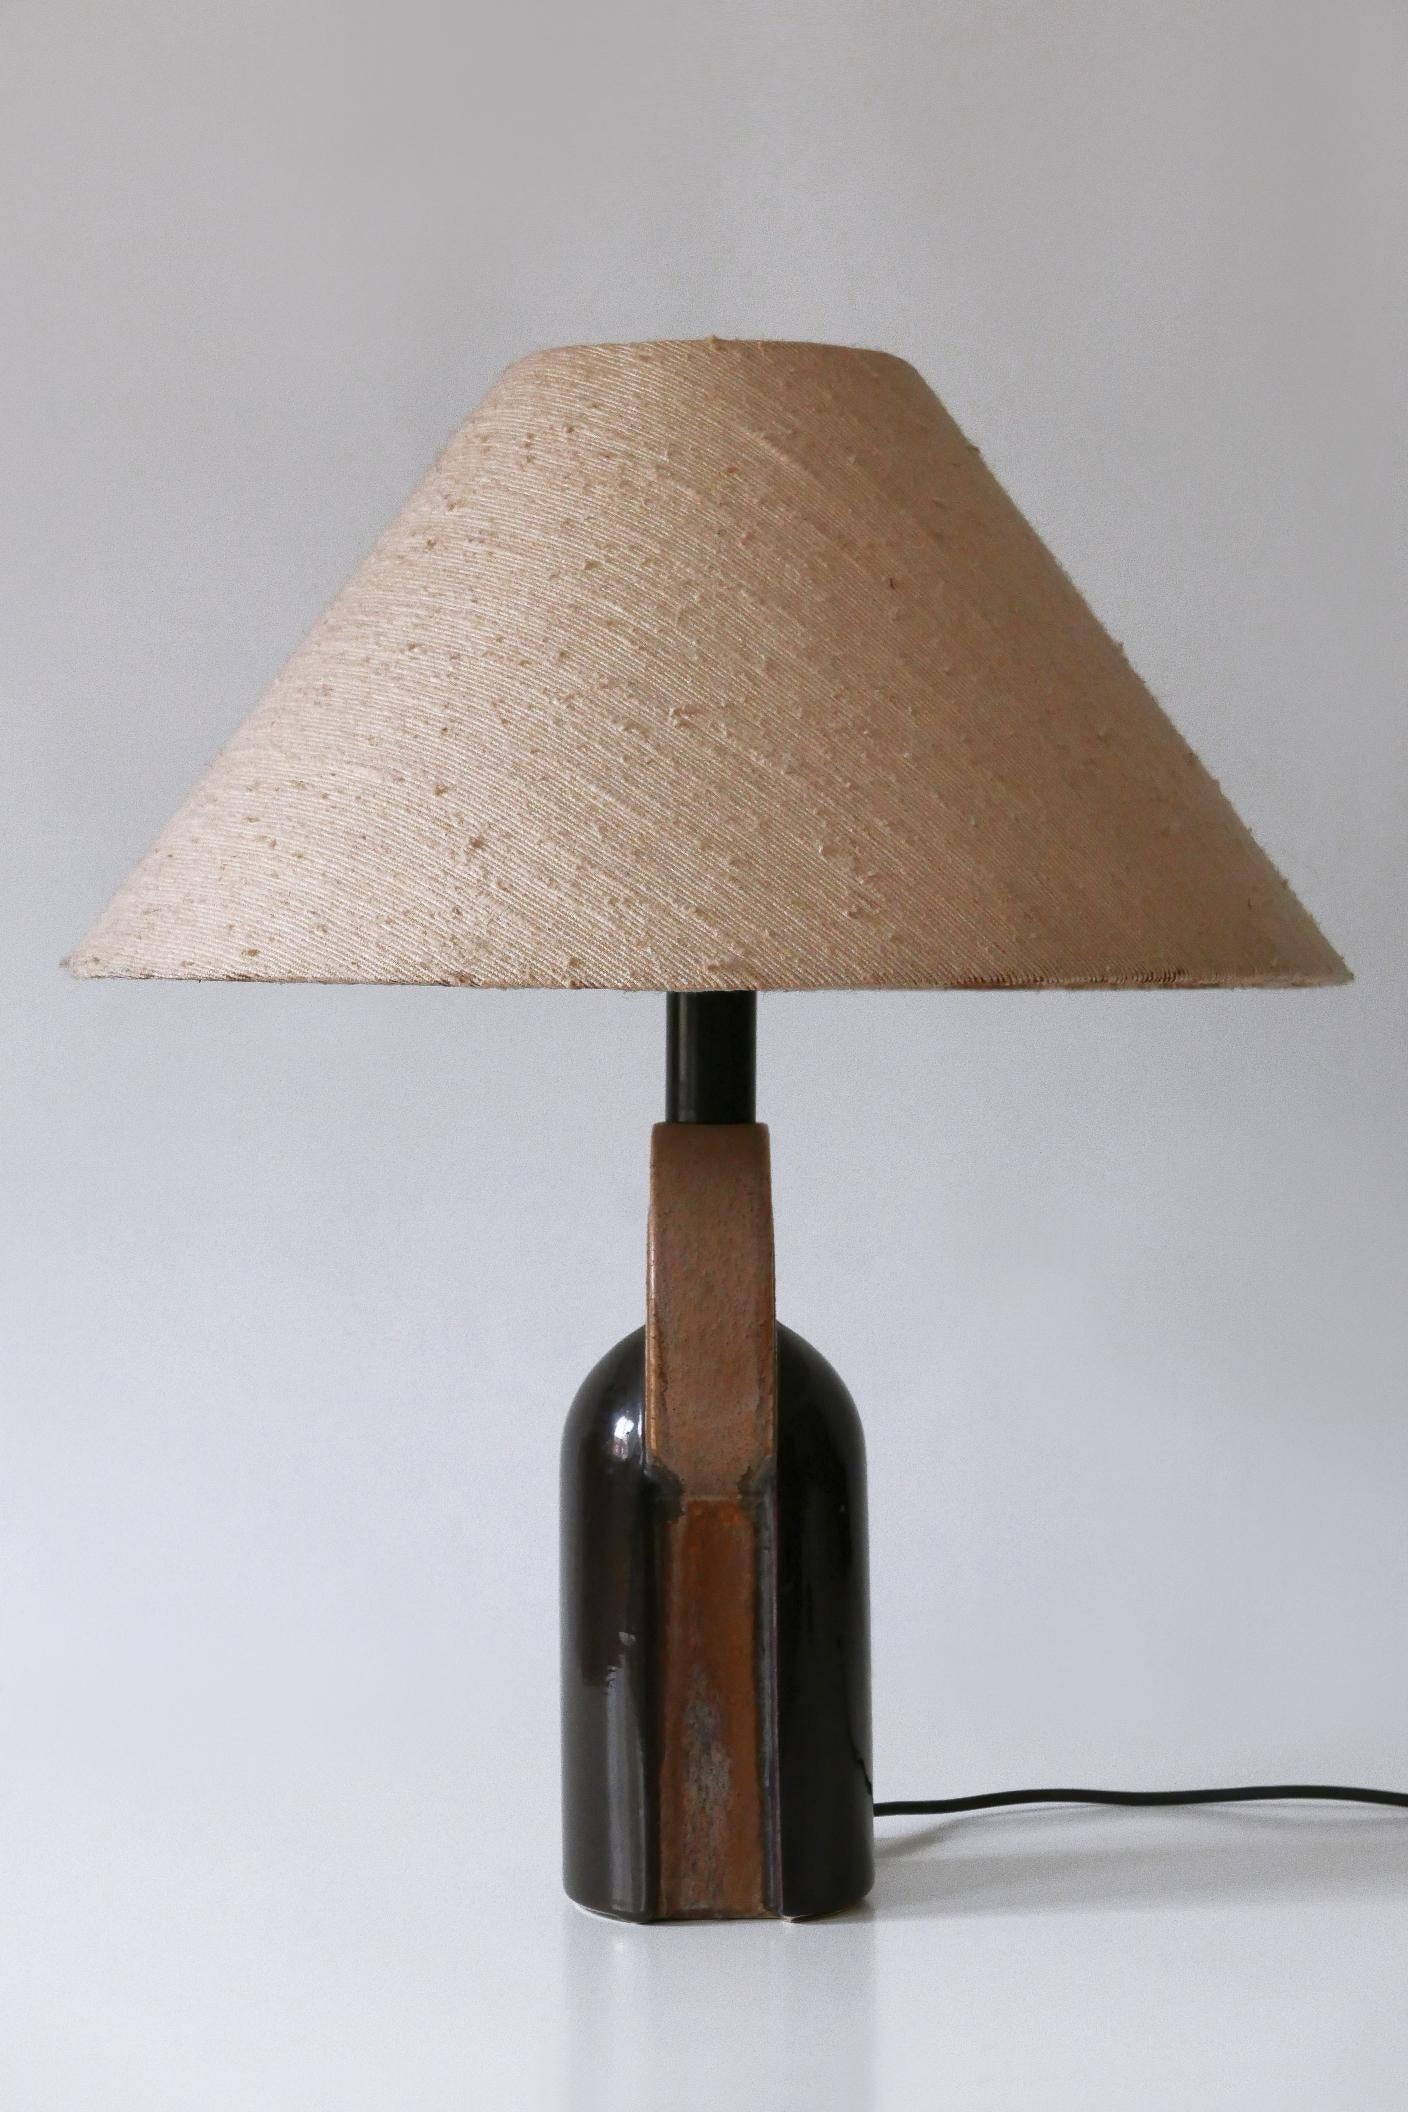 Elegant Mid-Century Modern Ceramic Table Lamp by Leola Design Germany 1960s For Sale 10